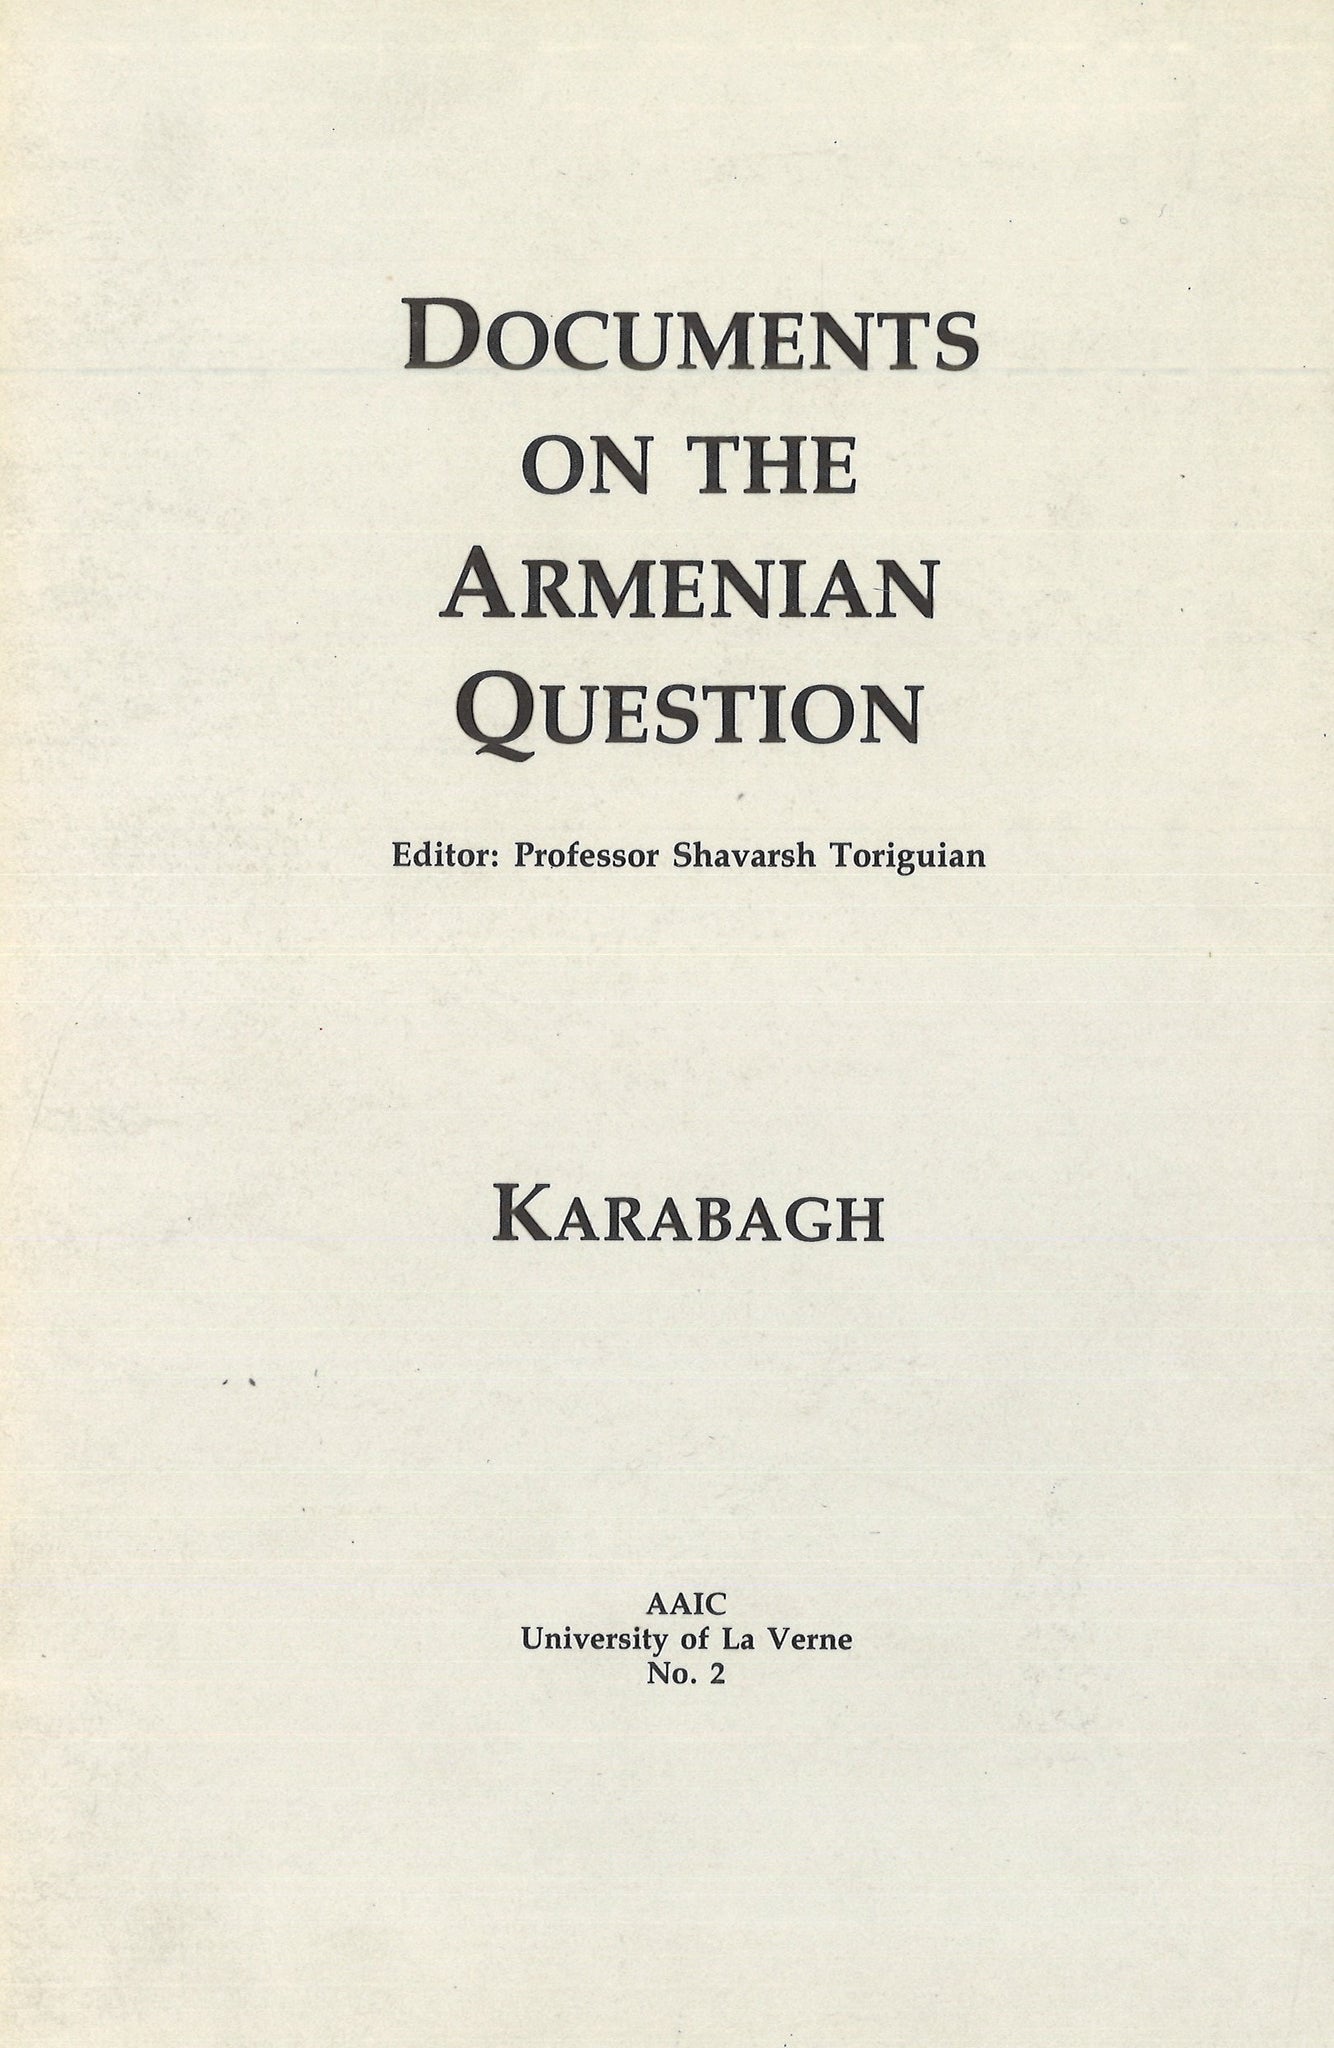 DOCUMENTS ON THE ARMENIAN QUESTION: Karabagh